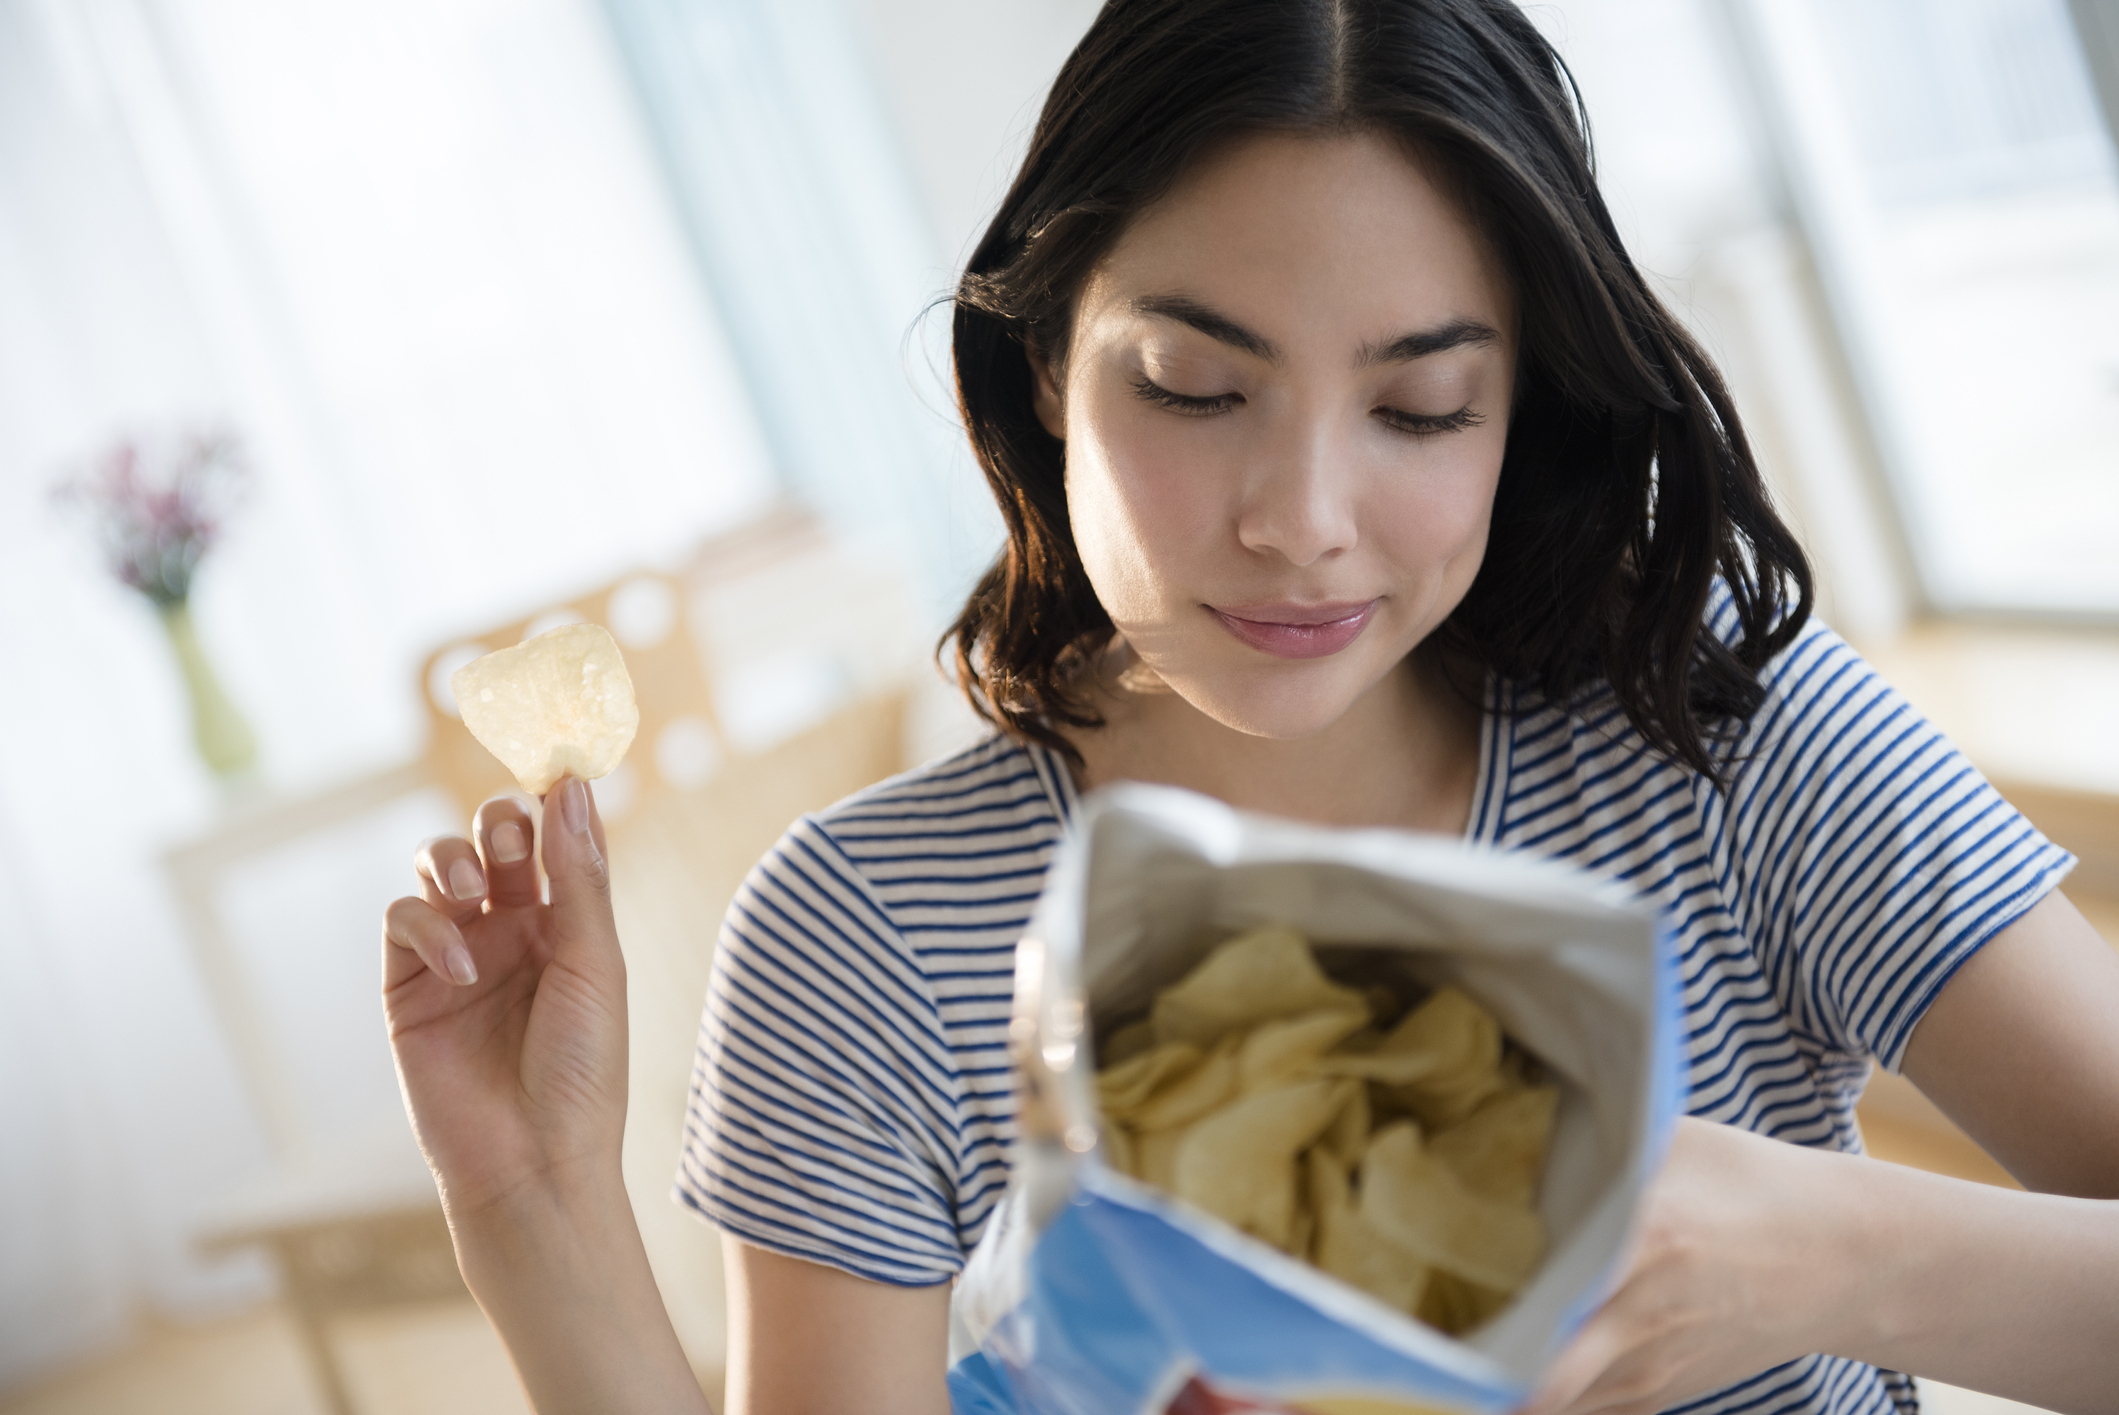 A woman eating potato chips